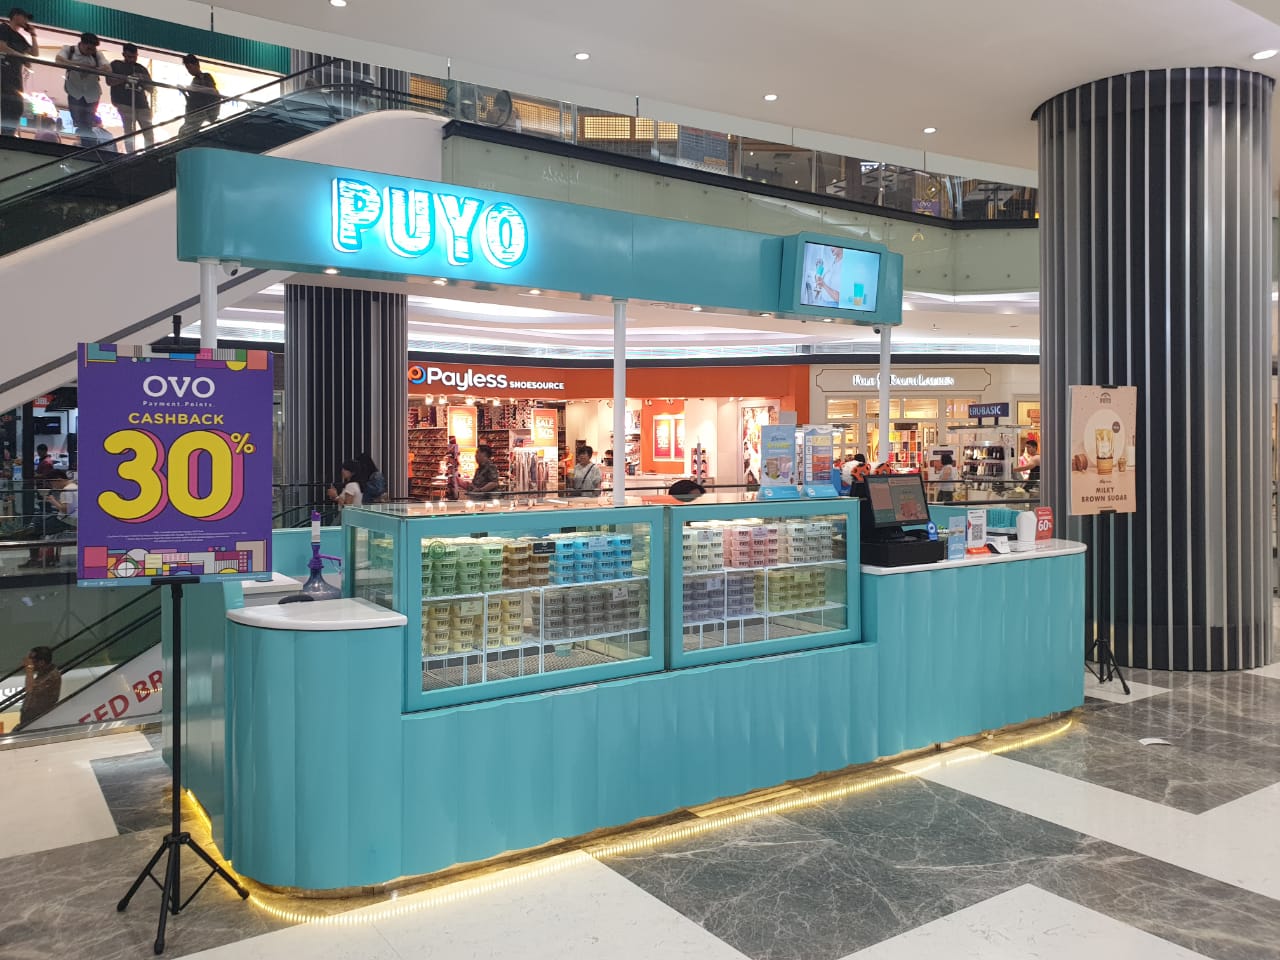 Puyo shop front in lippo mall puri st. moritz